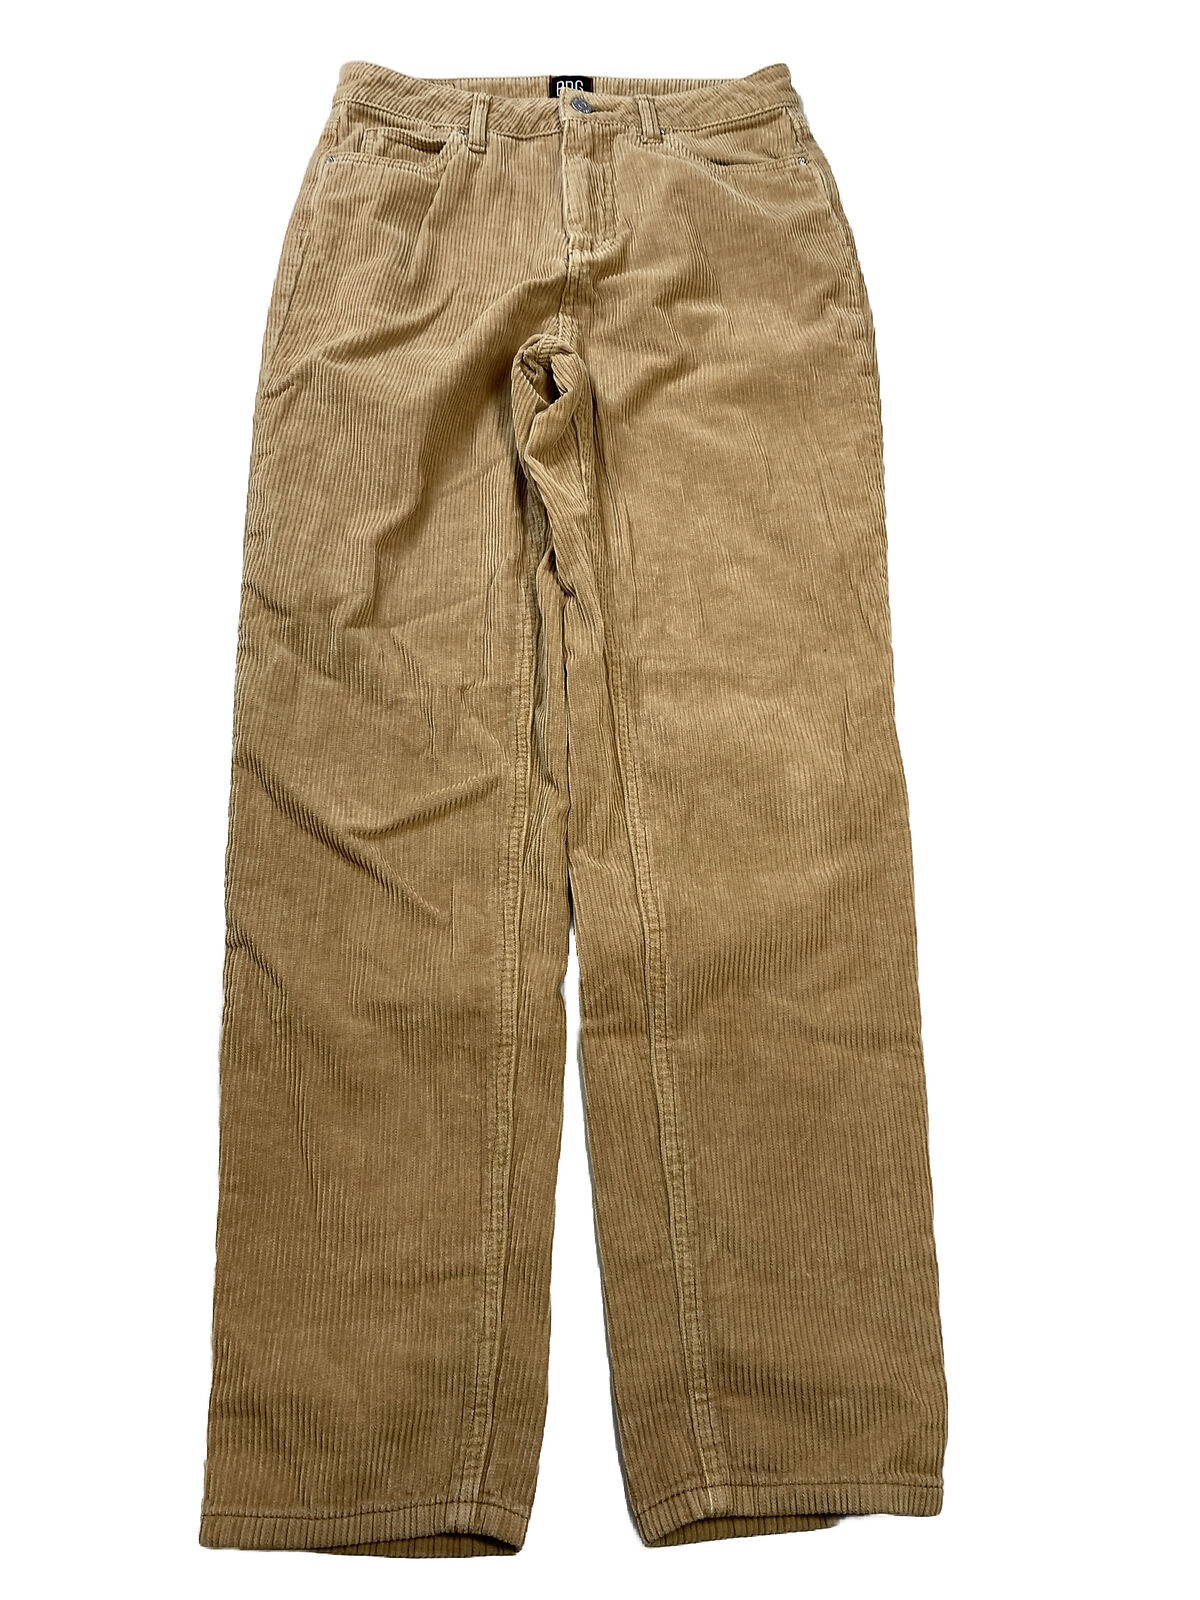 BDG Pantalones Mom de pana marrón de talle alto para mujer - 27